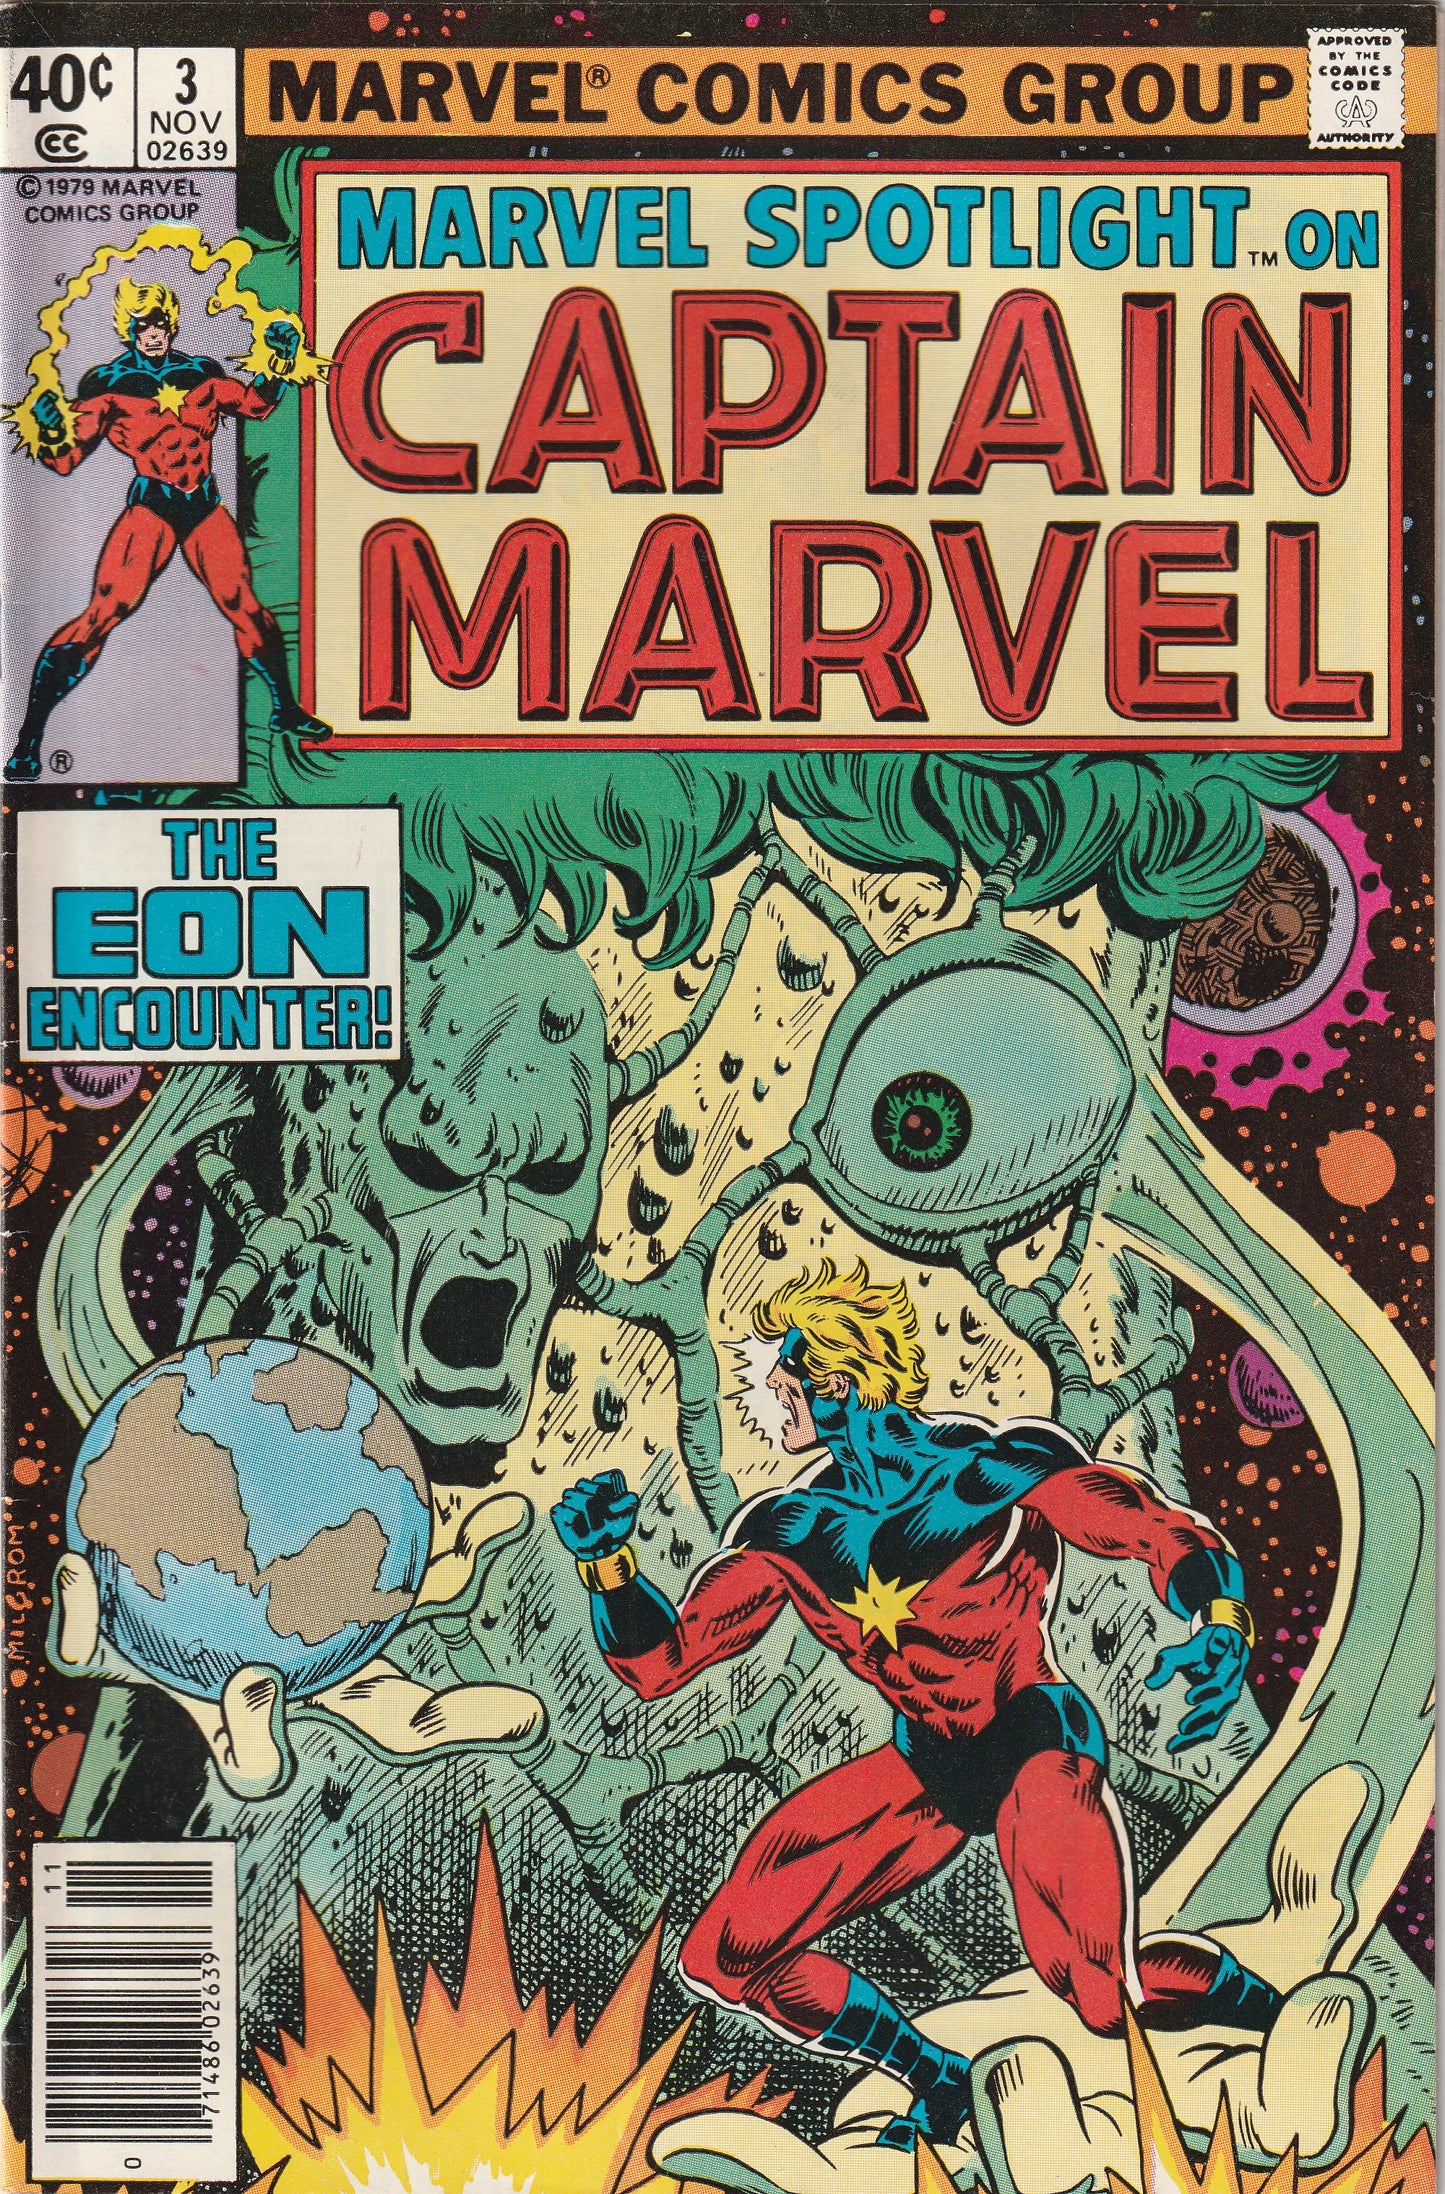 Marvel Spotlight Volume 2 #3 (1979) Captain Marvel